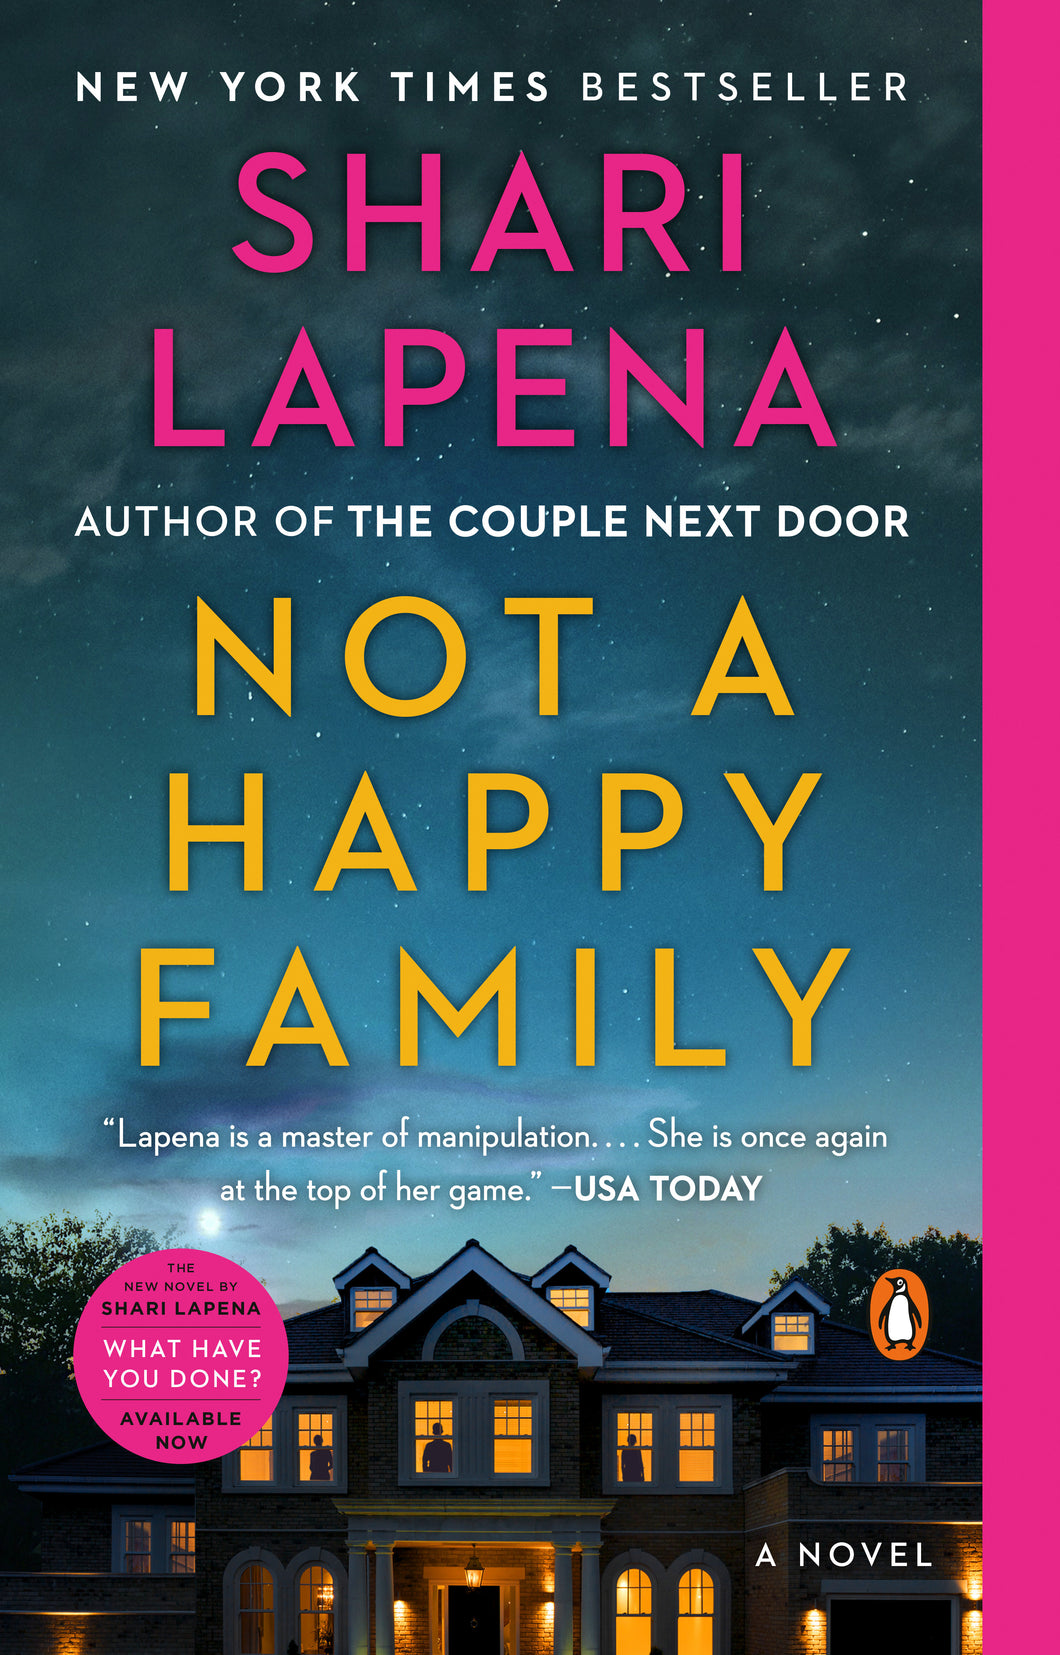 Not a Happy Family: A Novel